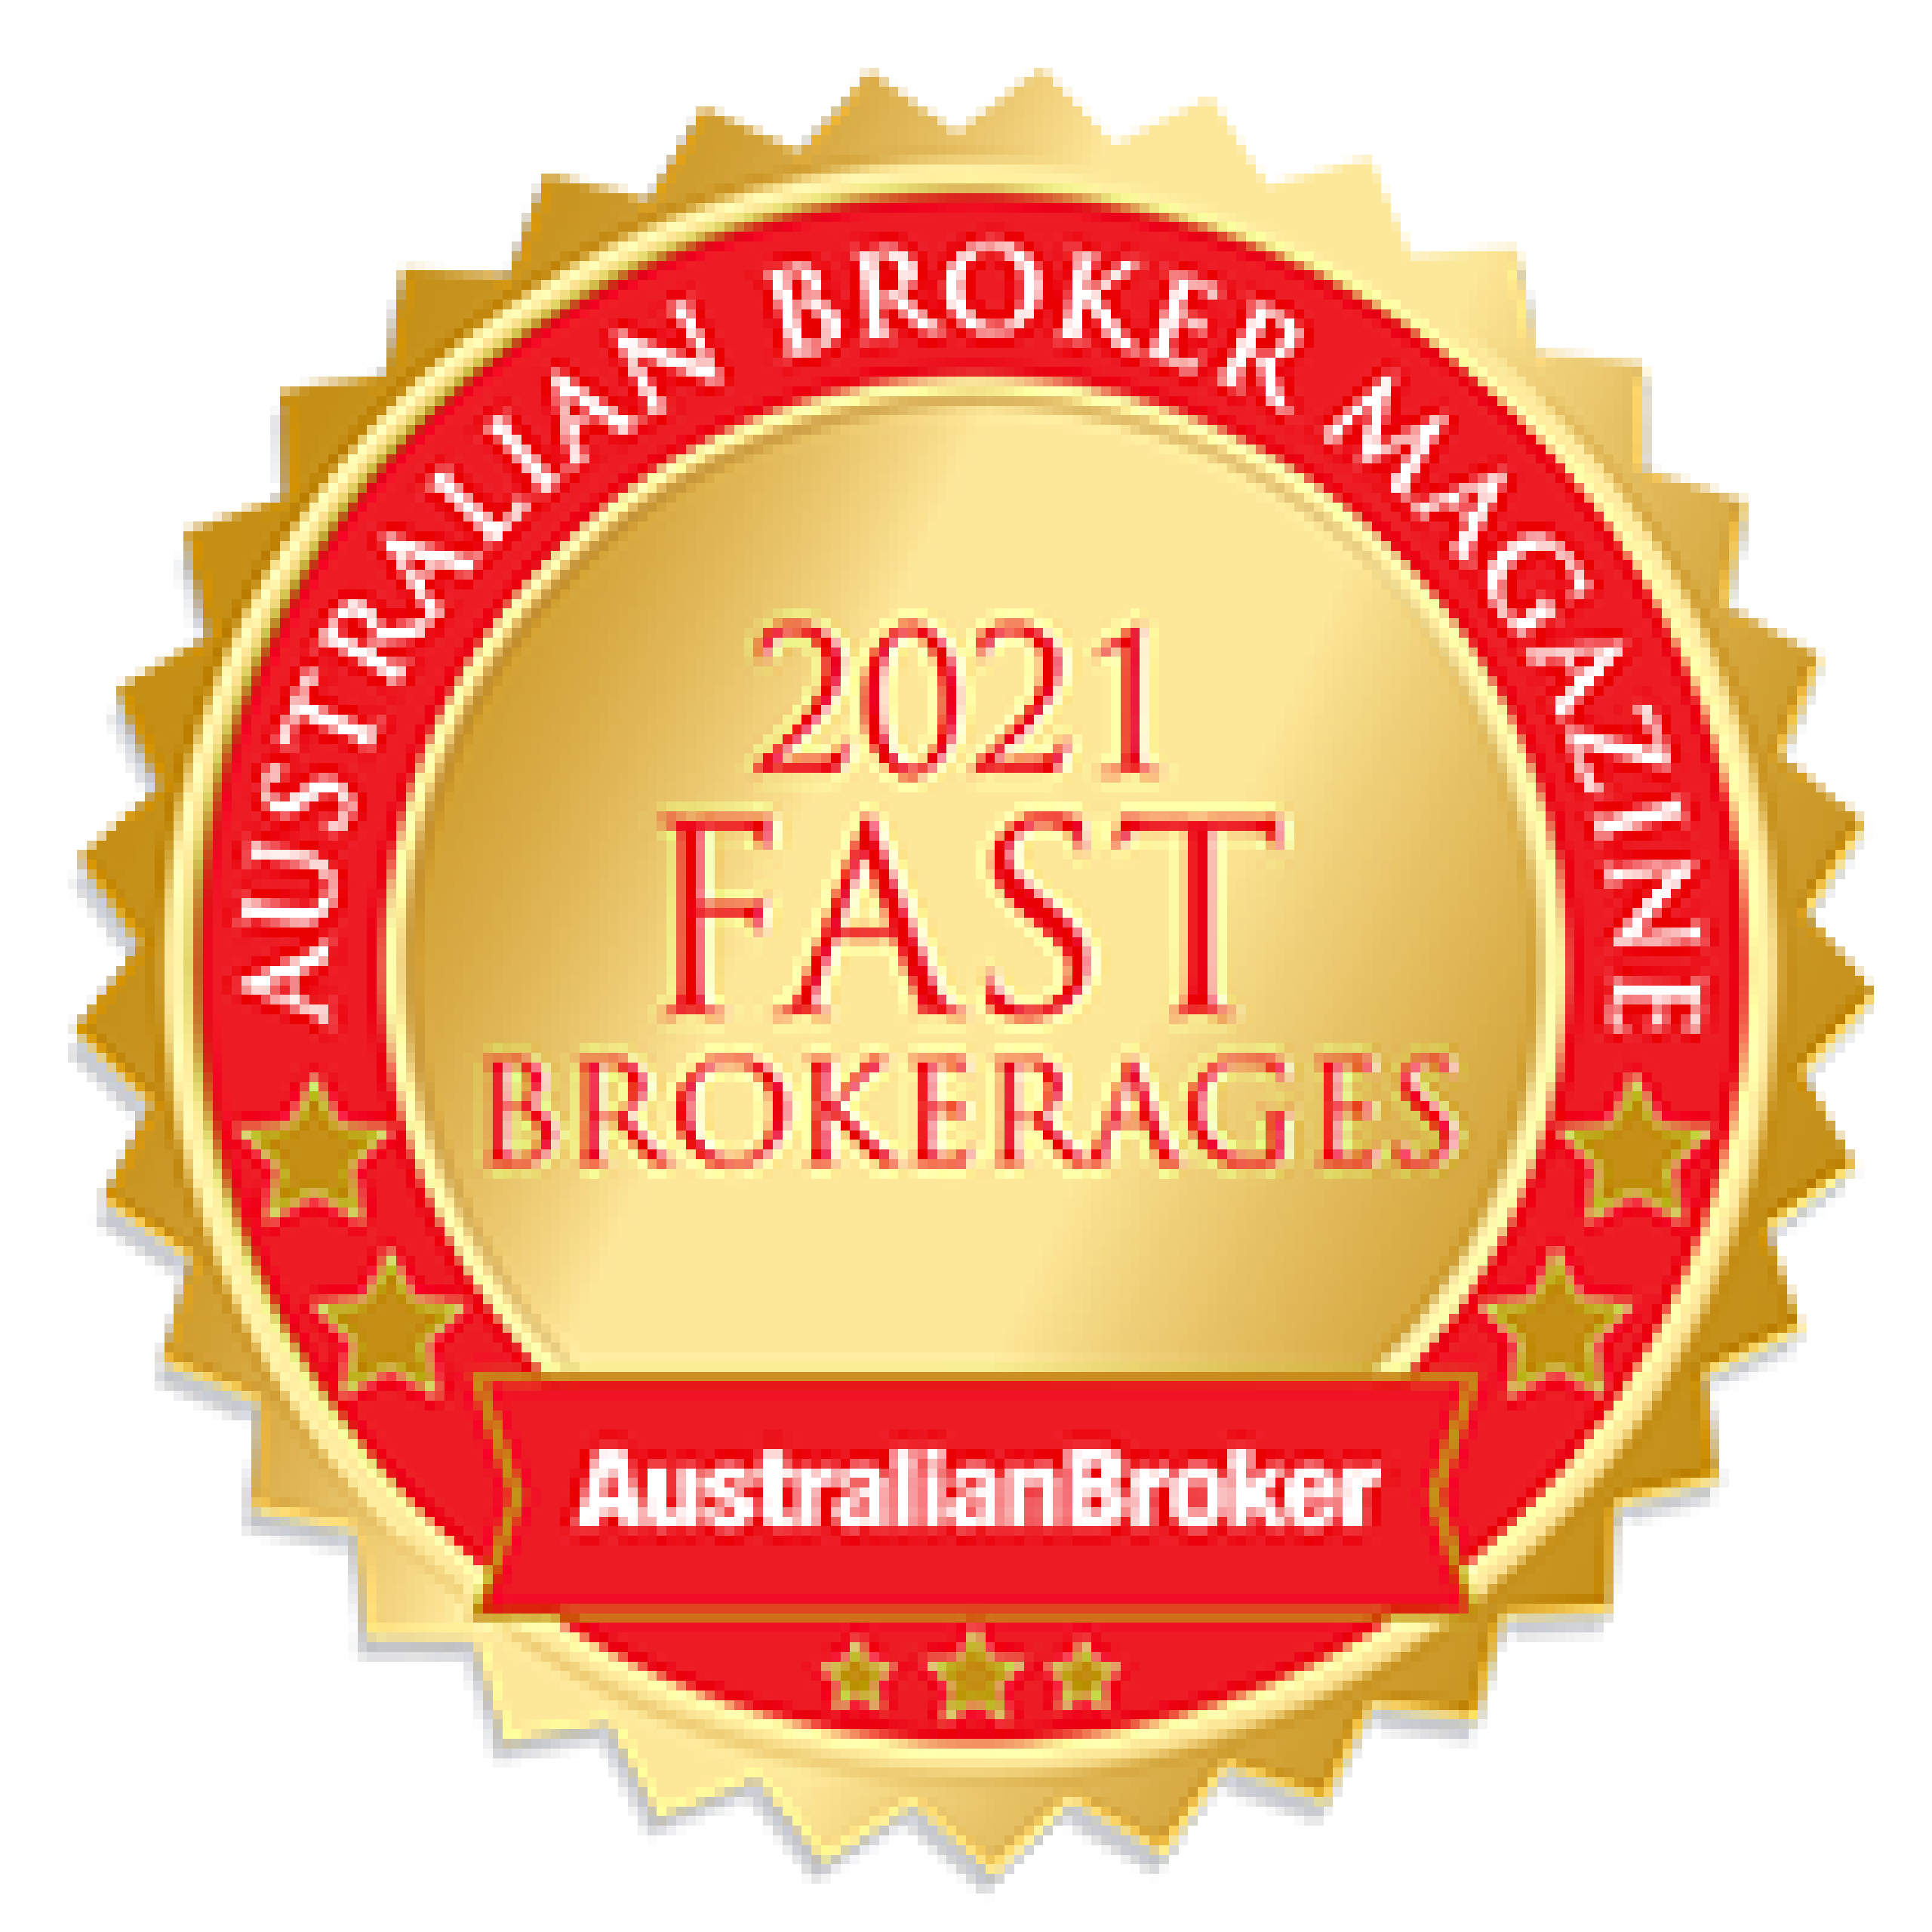  2021 Fast brokerages